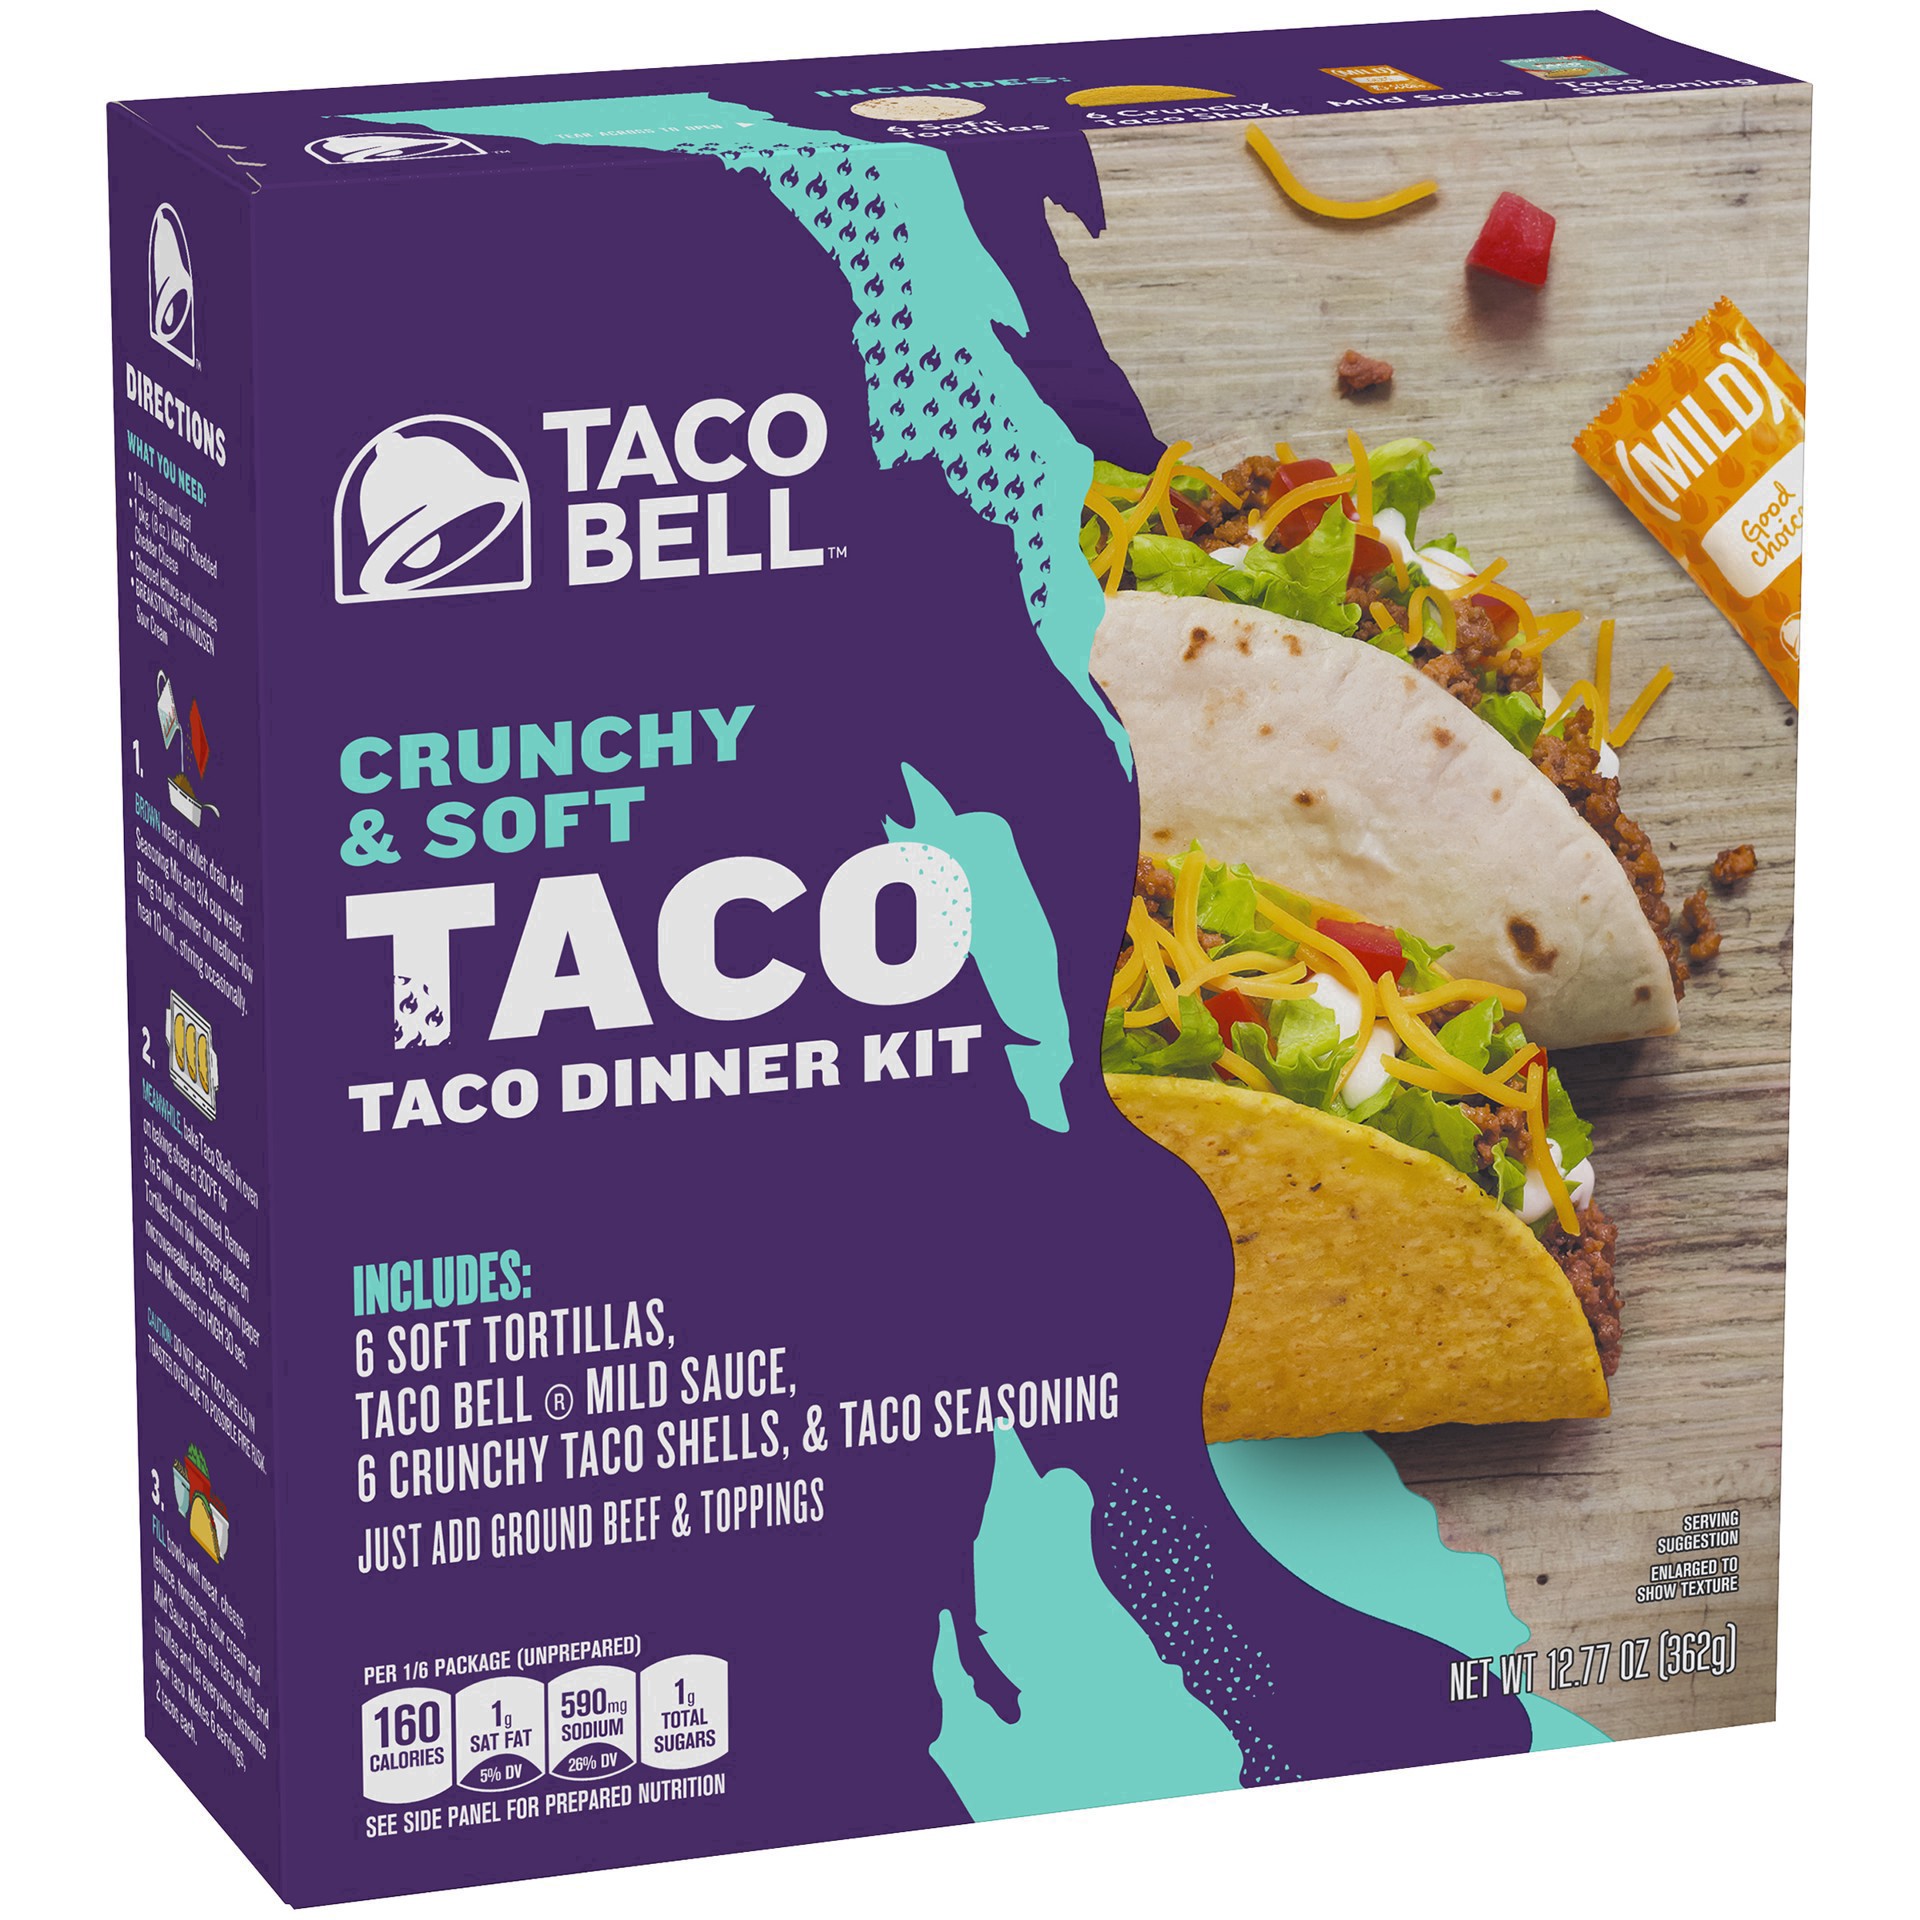 slide 32 of 101, Taco Bell Crunchy & Soft Taco Cravings Kit with 6 Soft Tortillas, 6 Crunchy Taco Shells, Taco Bell Mild Sauce & Seasoning, 12.77 oz Box, 1 ea